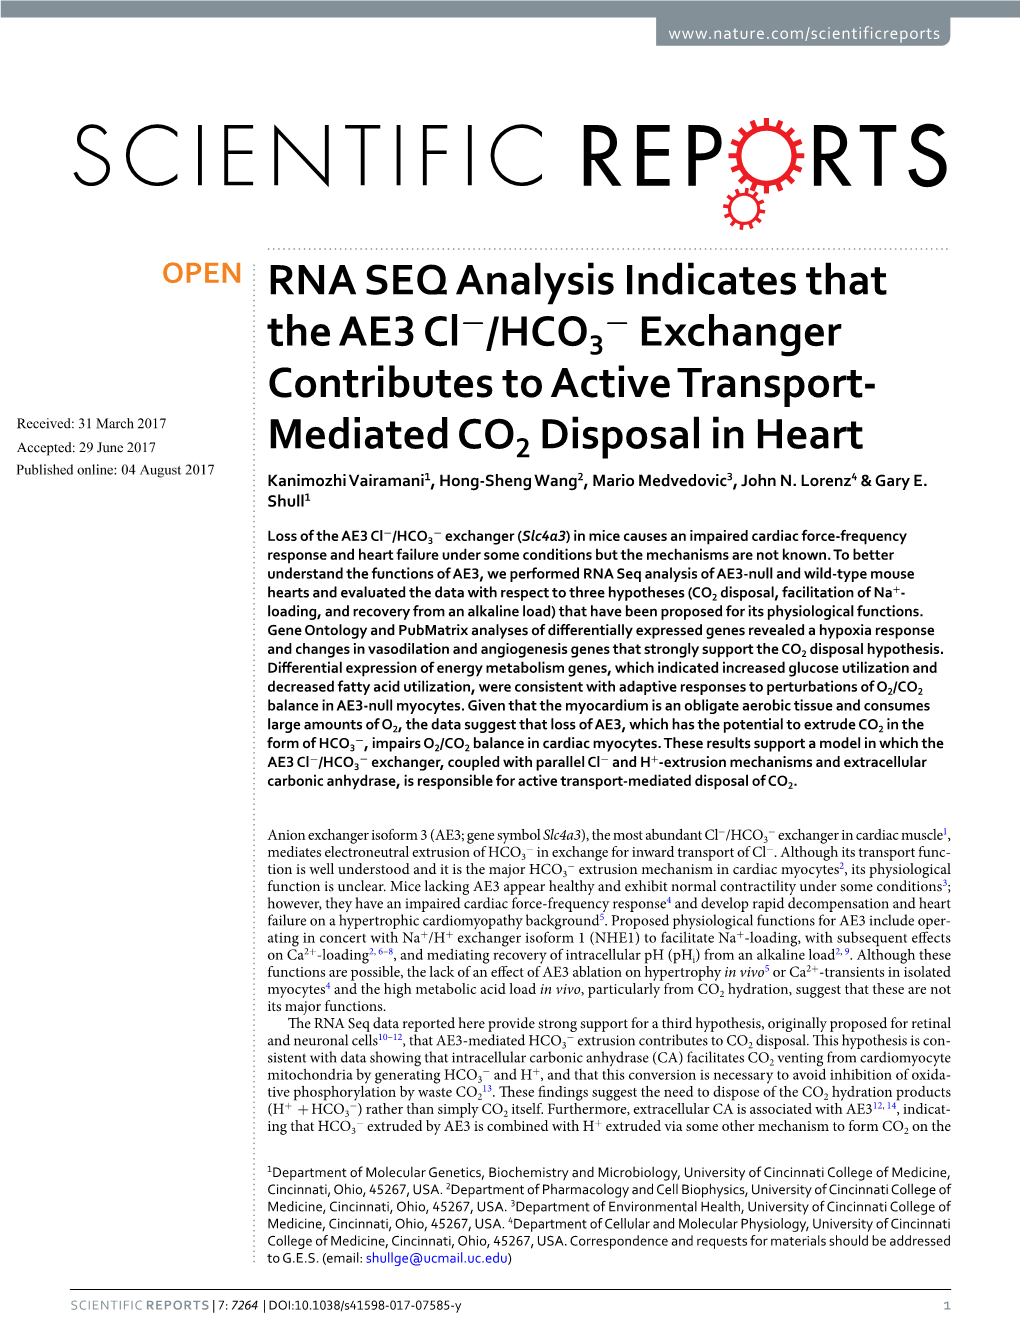 RNA SEQ Analysis Indicates That the AE3 Cl-/HCO3